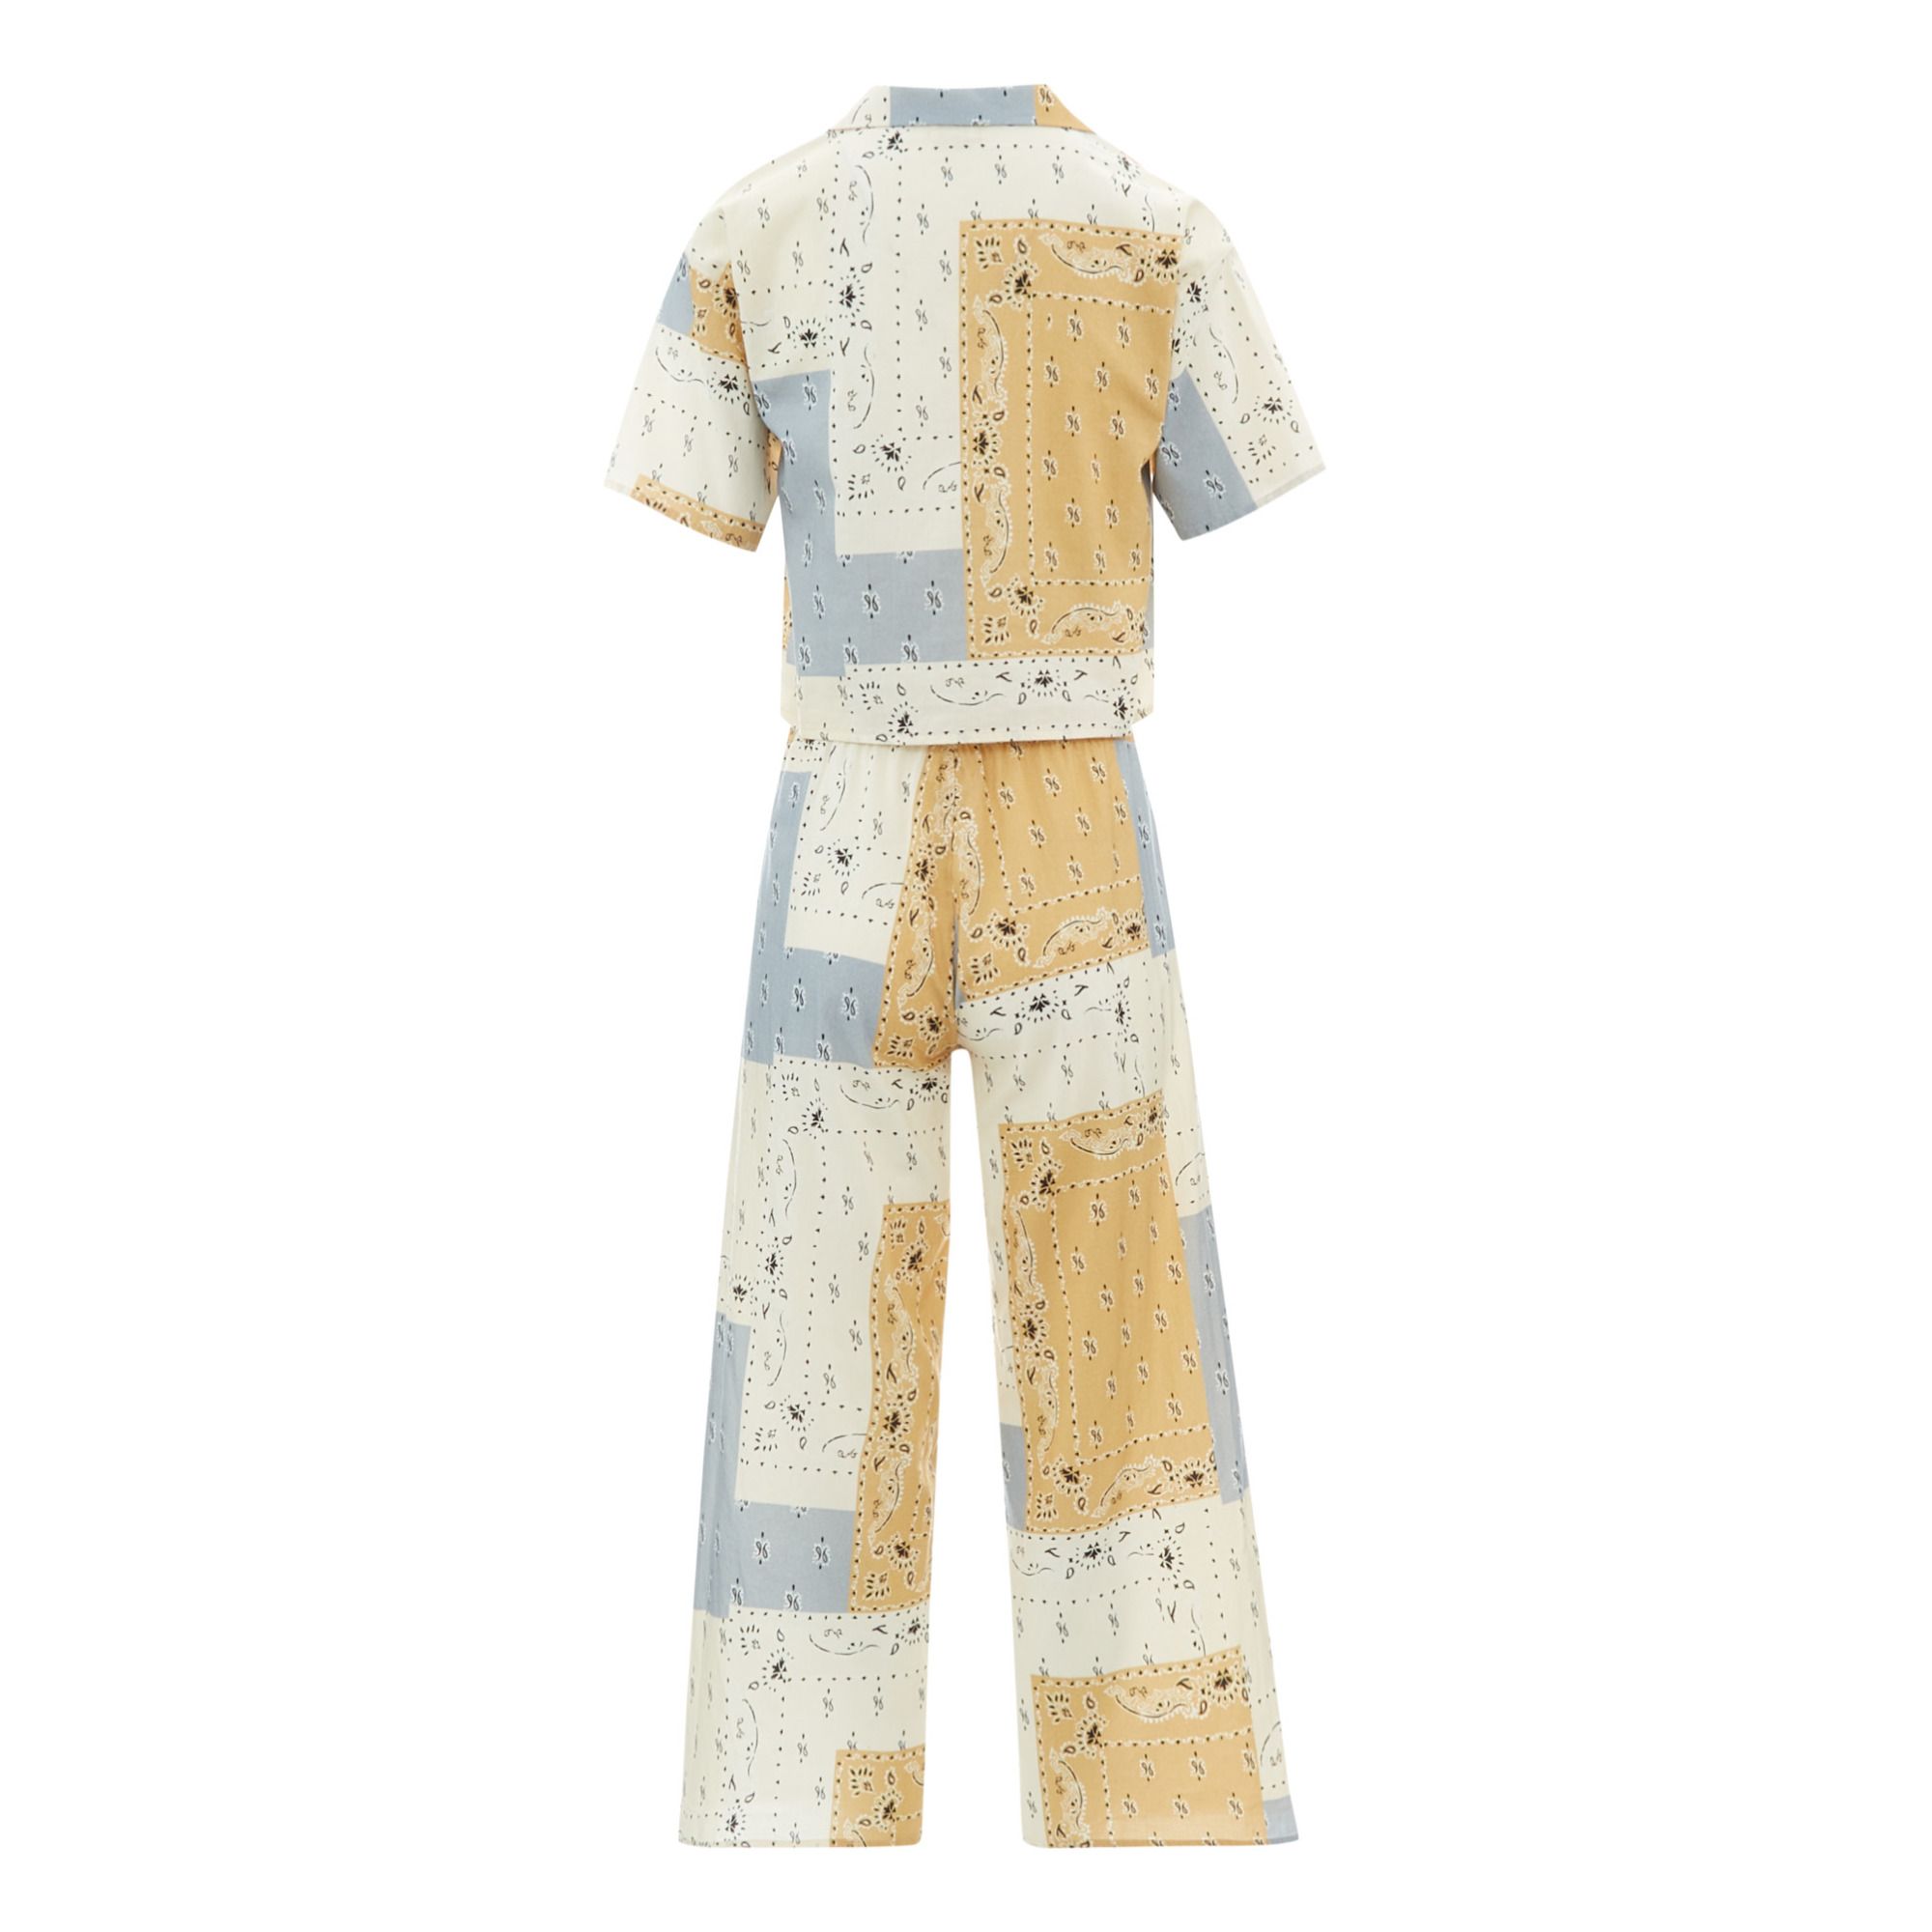 Exclusivité The New Society x Smallable Pyjama Party – Pyjama Chemise + Pantalon Ginger - Collection Femme - Beige- Image produit n°3